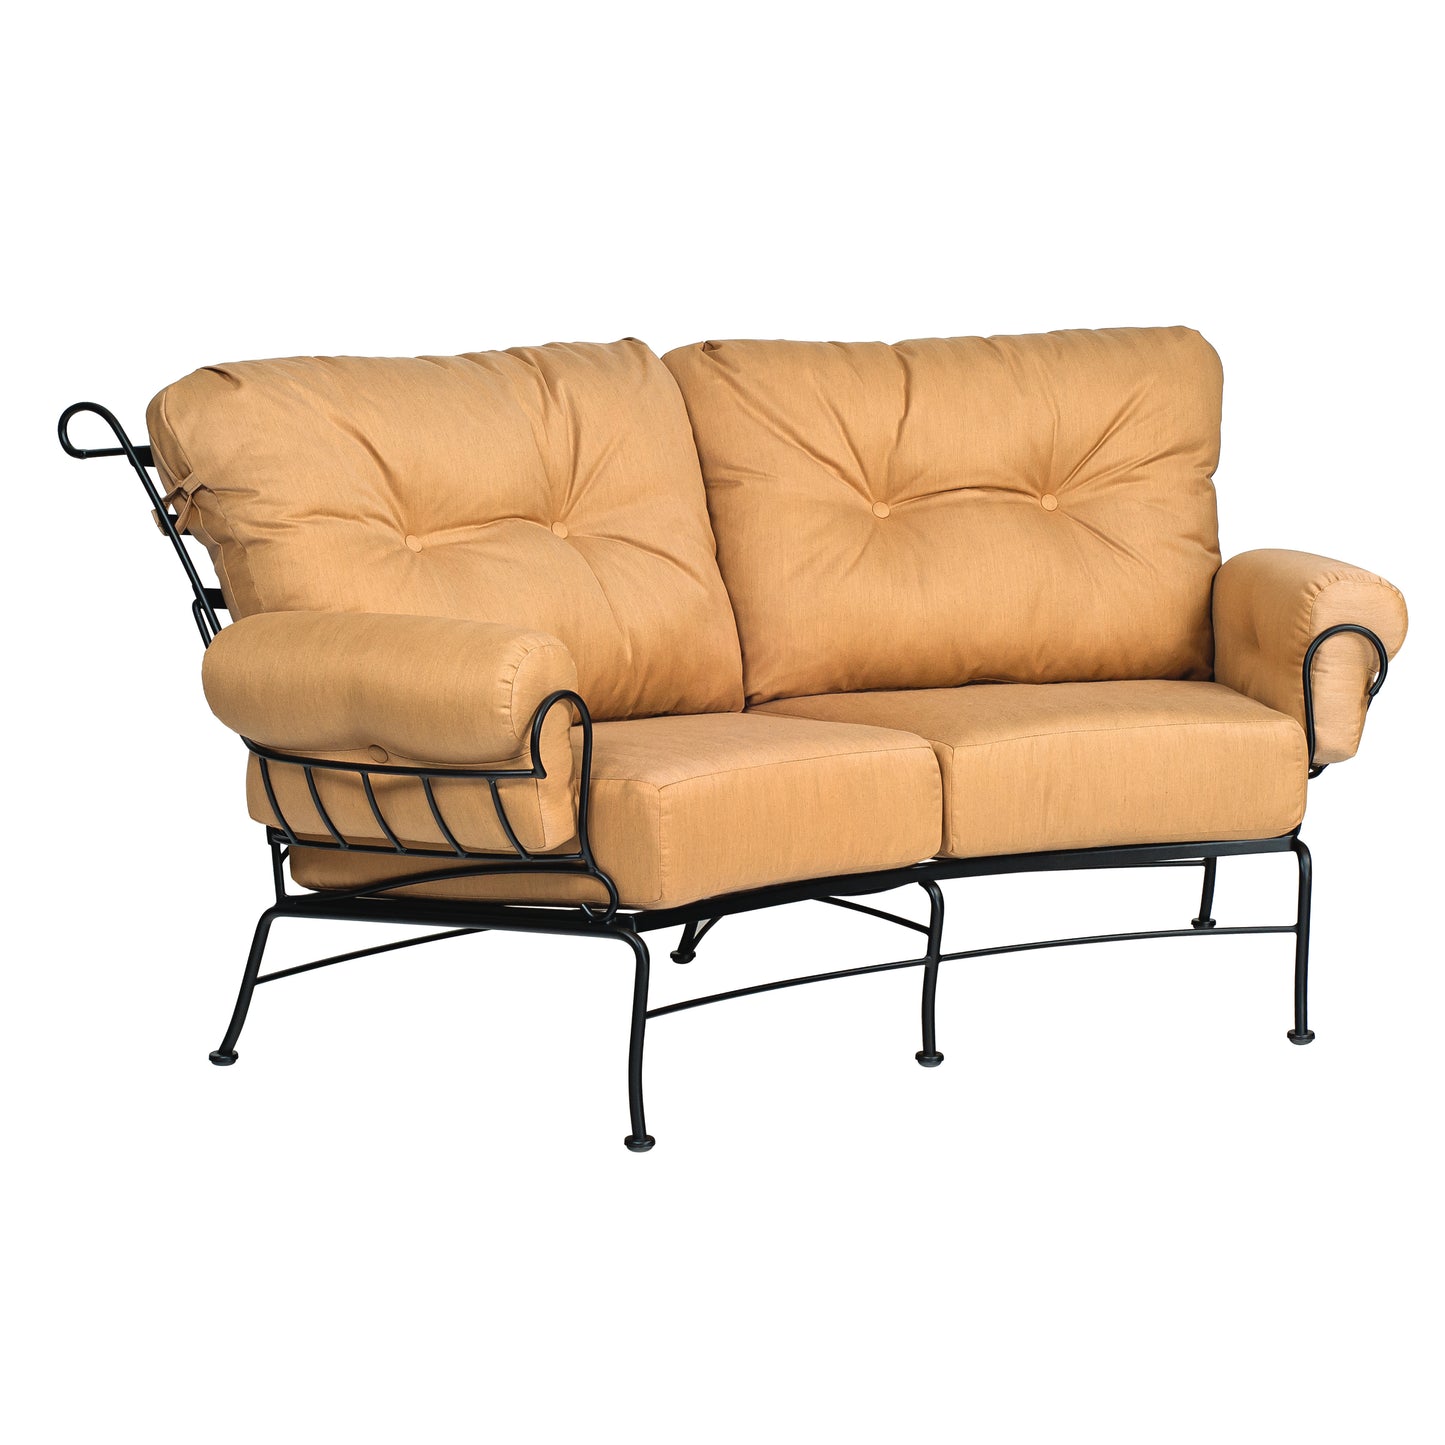 Woodard Terrace Cushion Crescent Love Seat 790063 - Textured Black / Michelangelo Toast